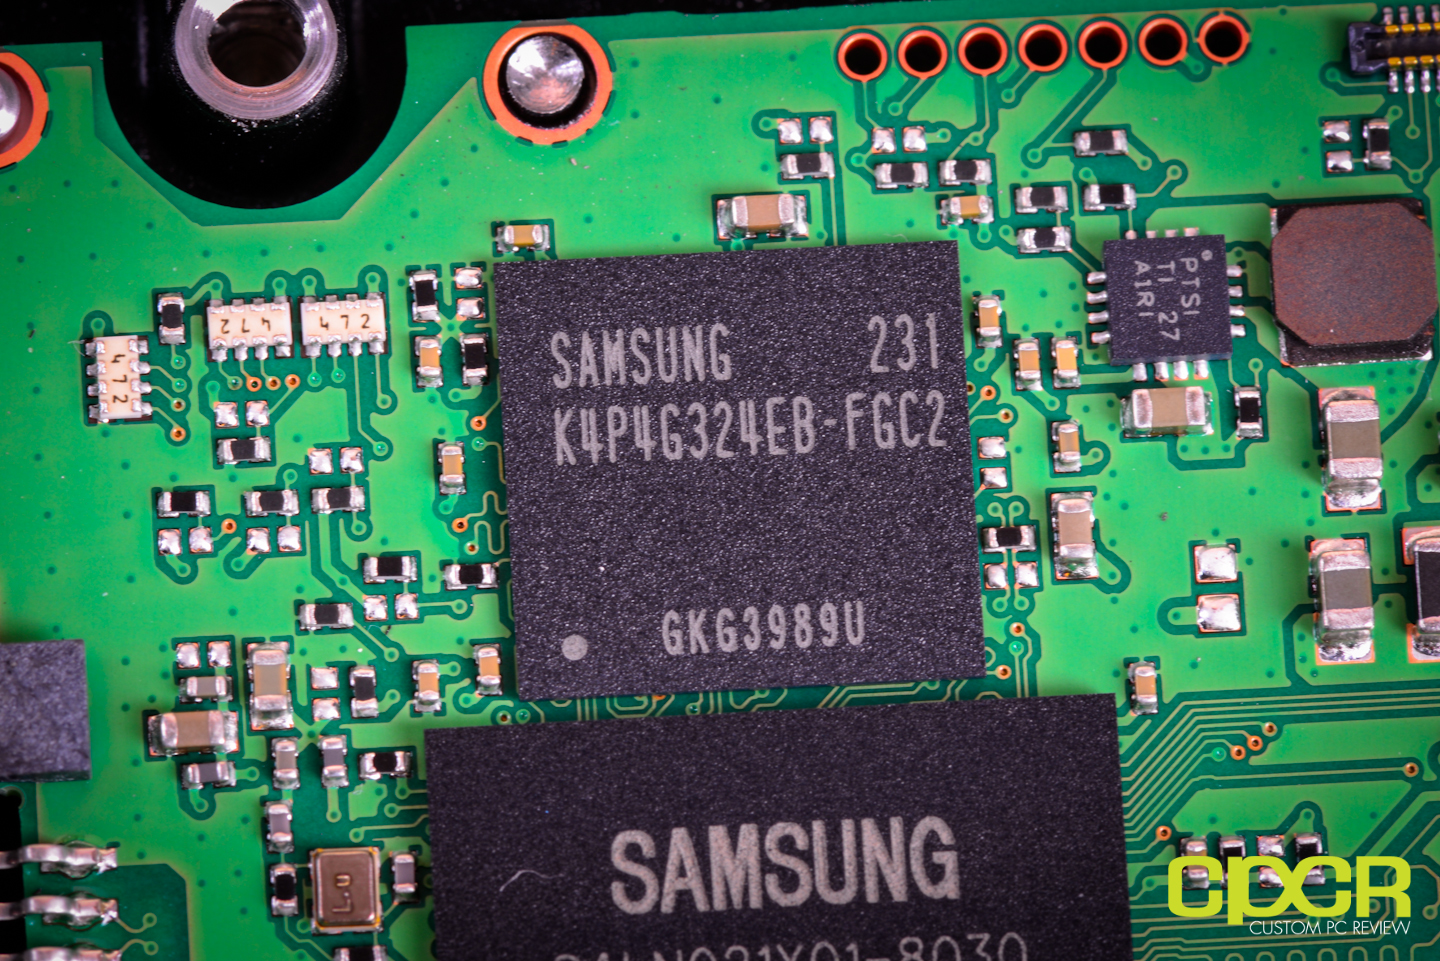 Samsung 840 Pro Series SSD | Custom PC Review